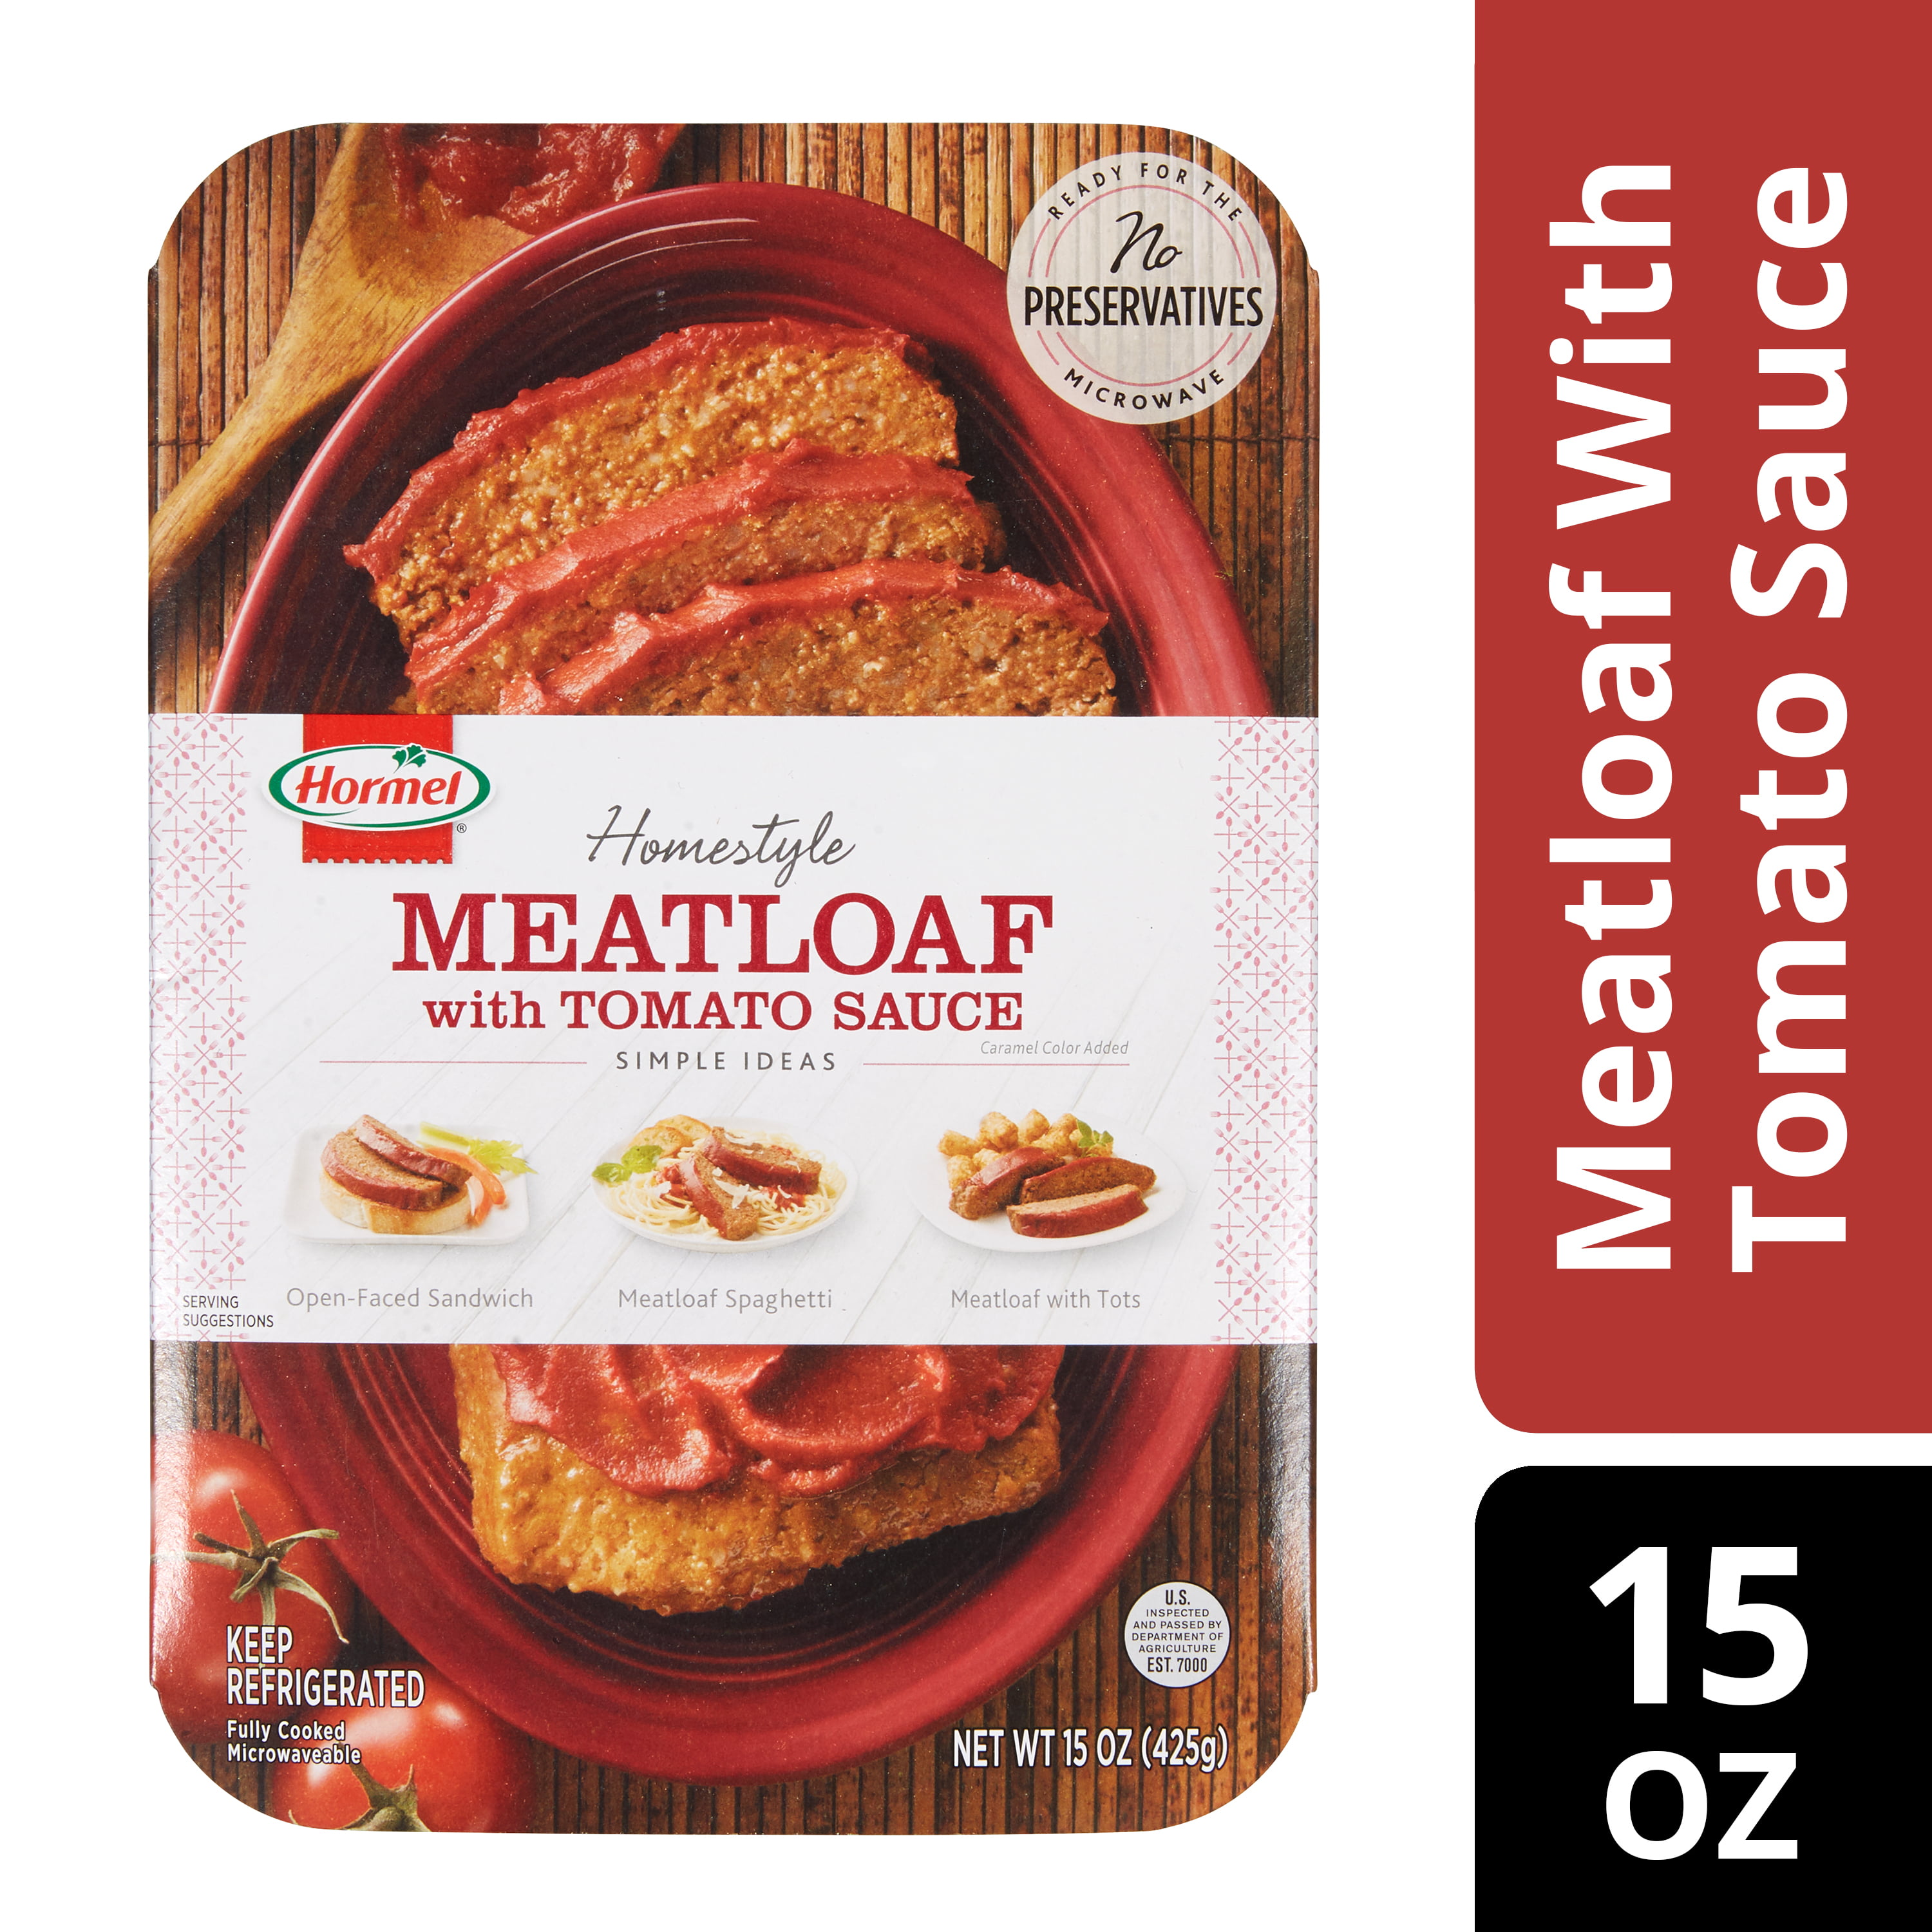 Hormel Homestyle Meatloaf With Tomato Sauce 1 Pack Walmart Com Walmart Com